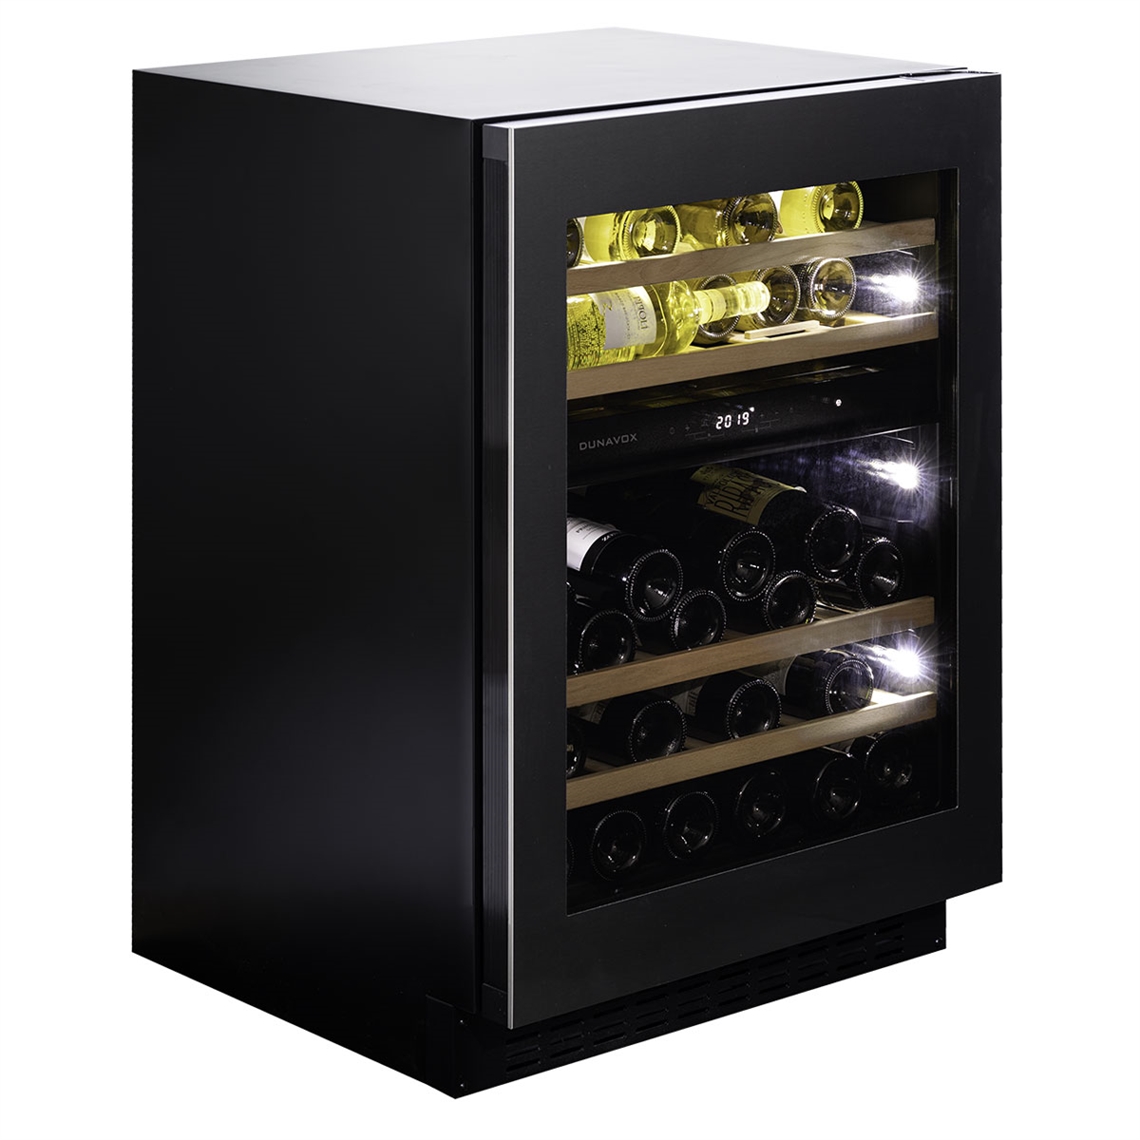 Dunavox Wine Cabinet Flow - 2-Temperature Built-In Under Counter - Stainless Steel DAUF-45.125DSS.TO